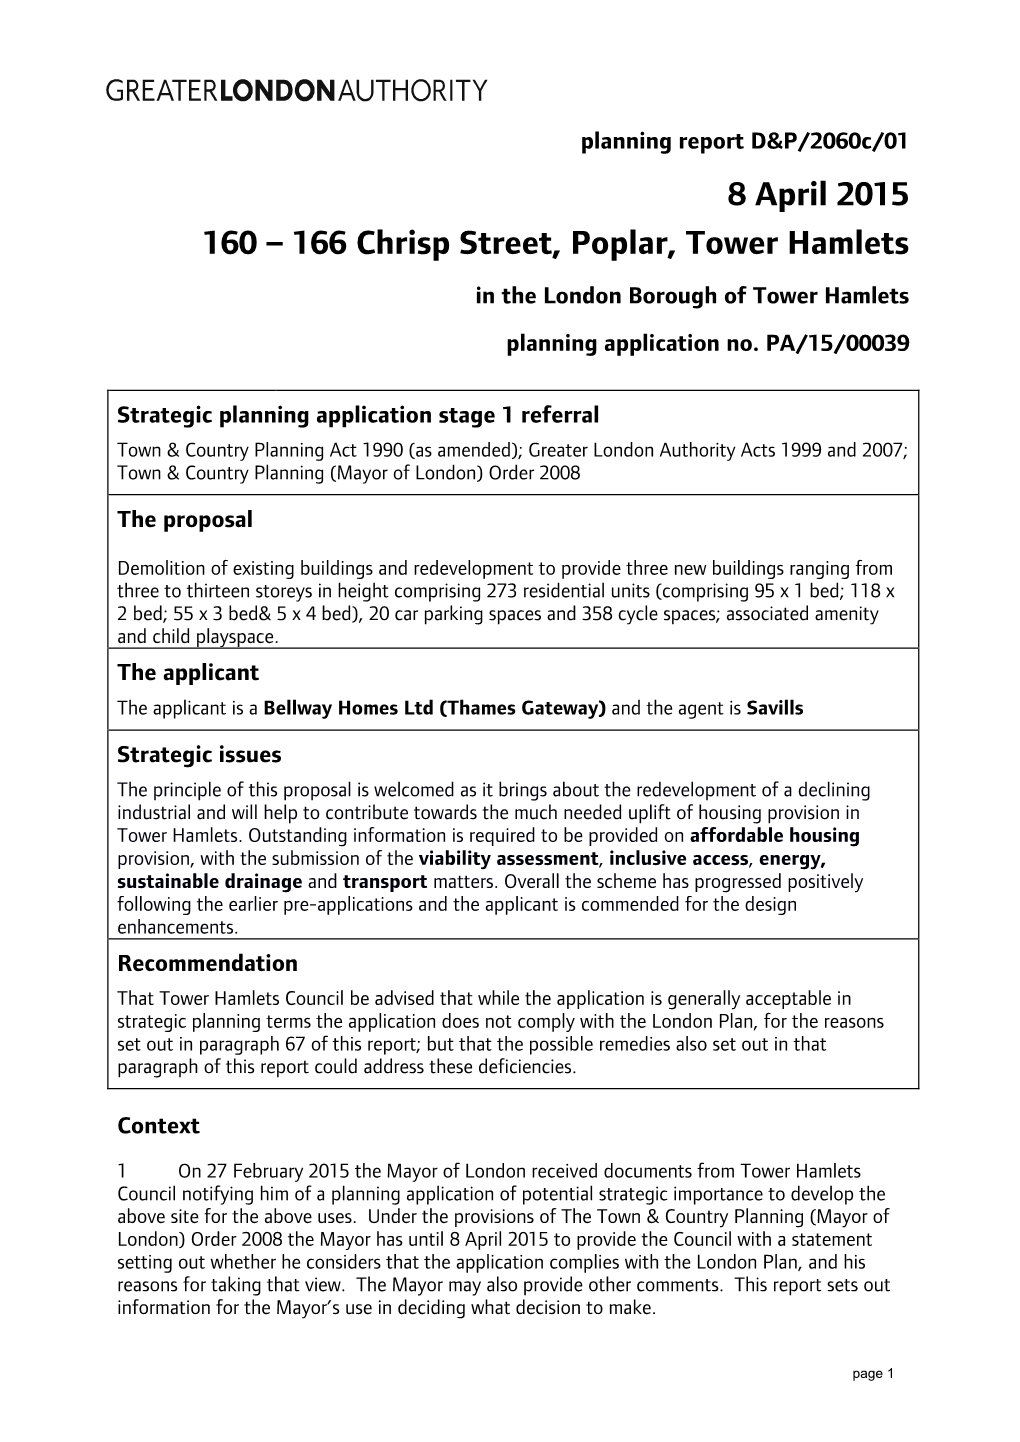 8 April 2015 160 – 166 Chrisp Street, Poplar, Tower Hamlets in the London Borough of Tower Hamlets Planning Application No